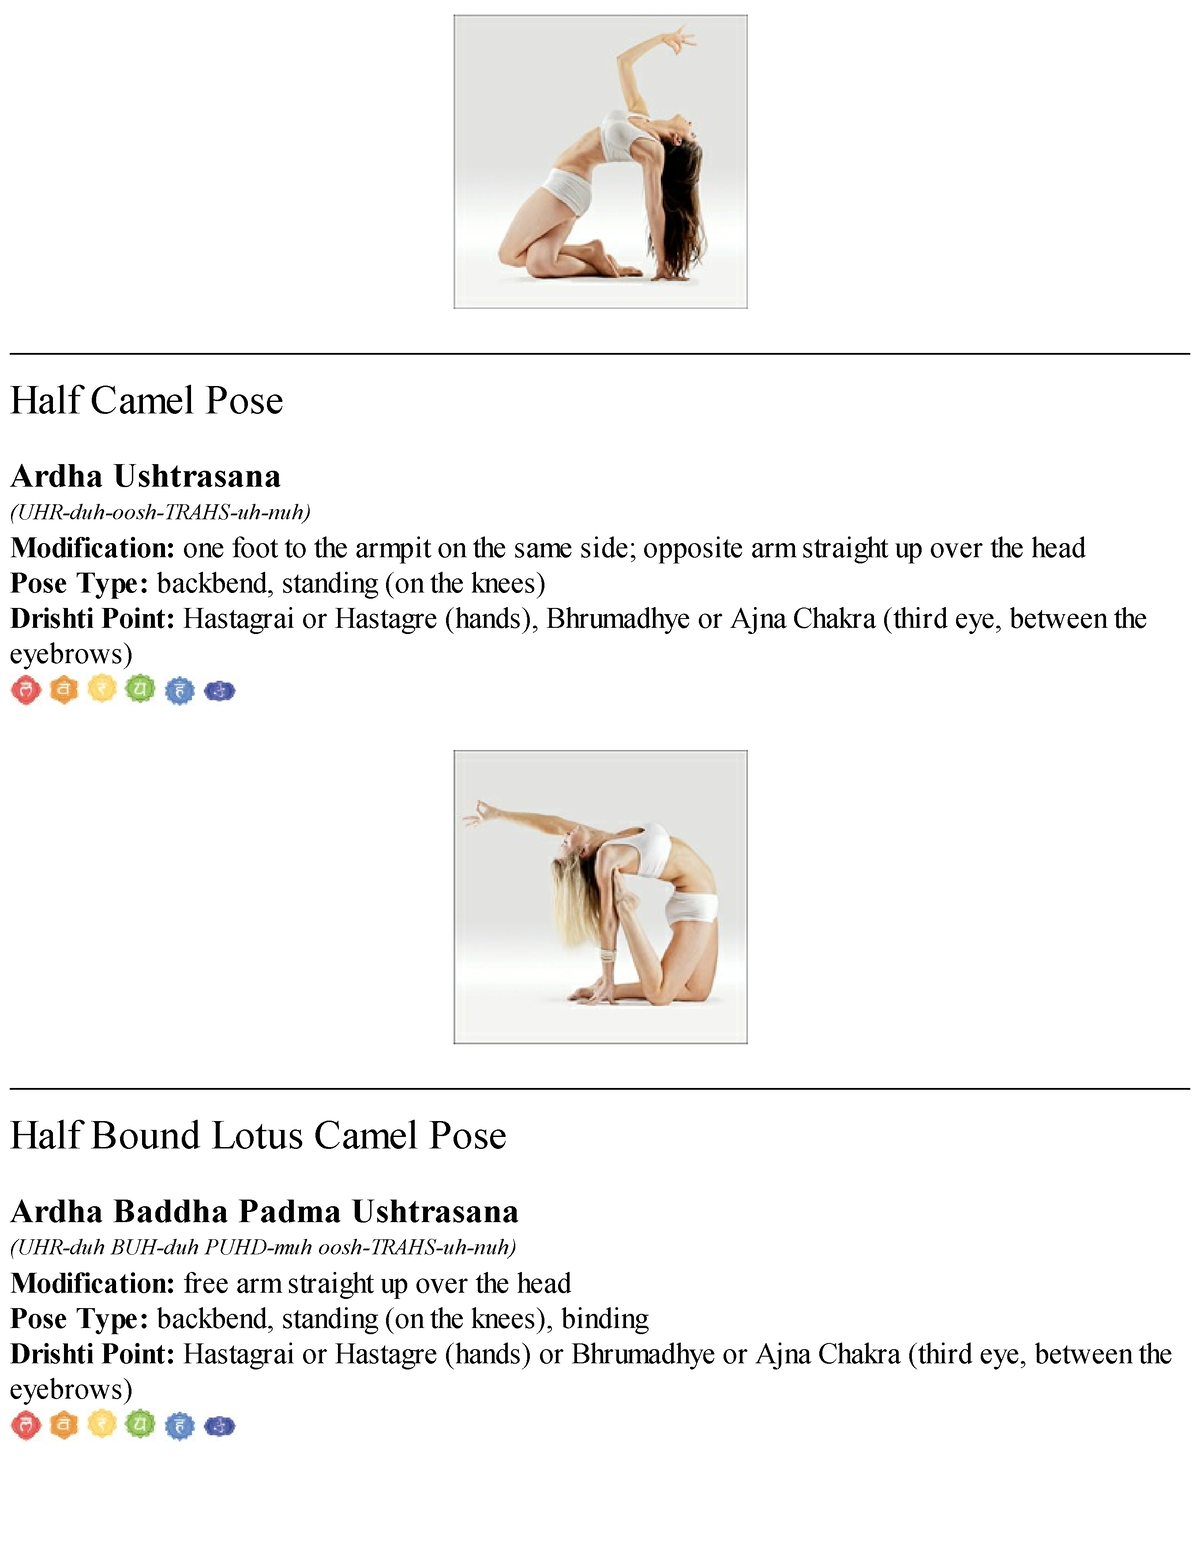 Learn the Camel Pose - Ushtrasana - Learn Yoga | Sikana